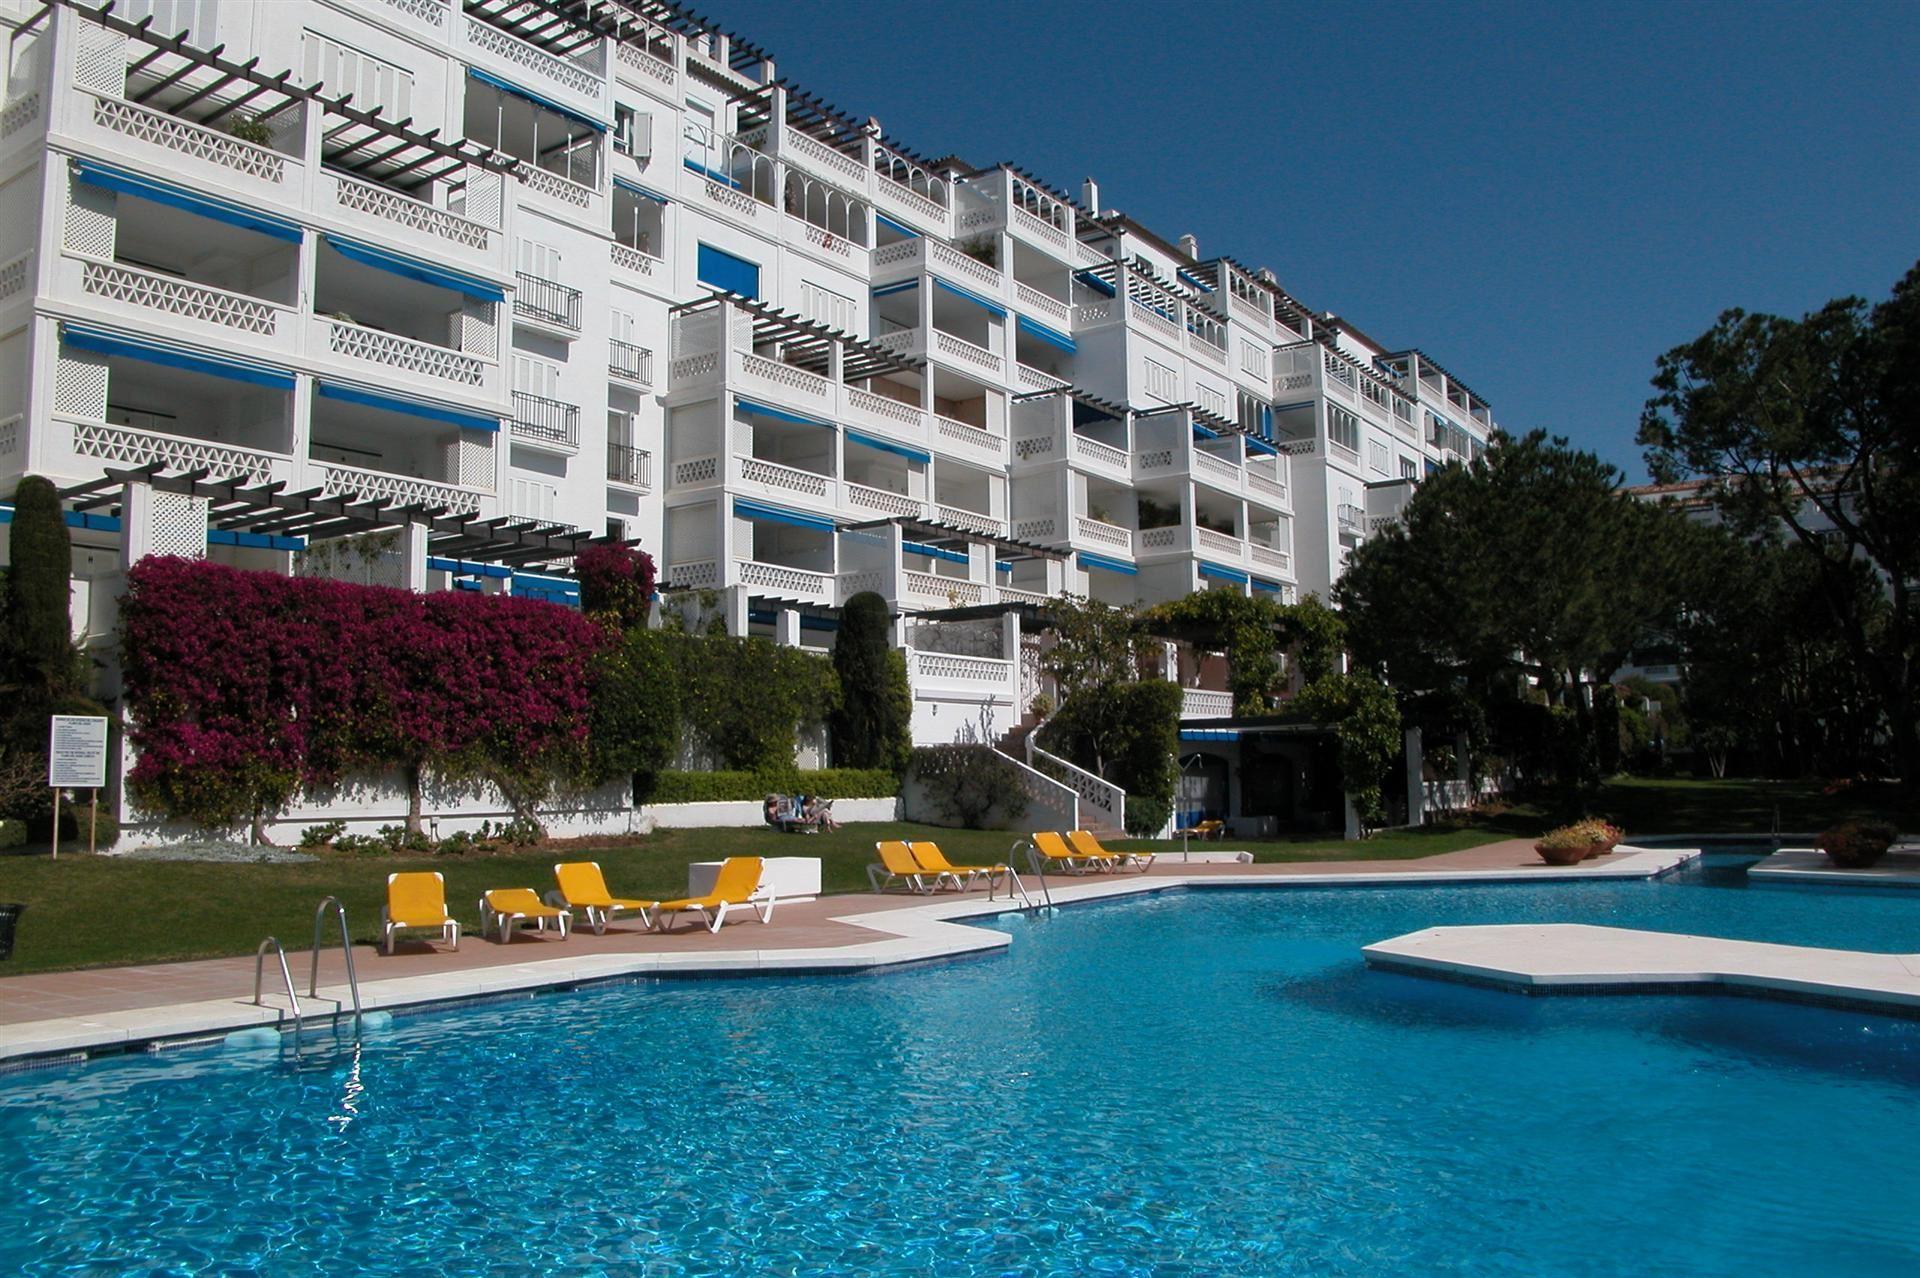 3 bedroom apartment / flat for sale in Marbella, Costa del Sol